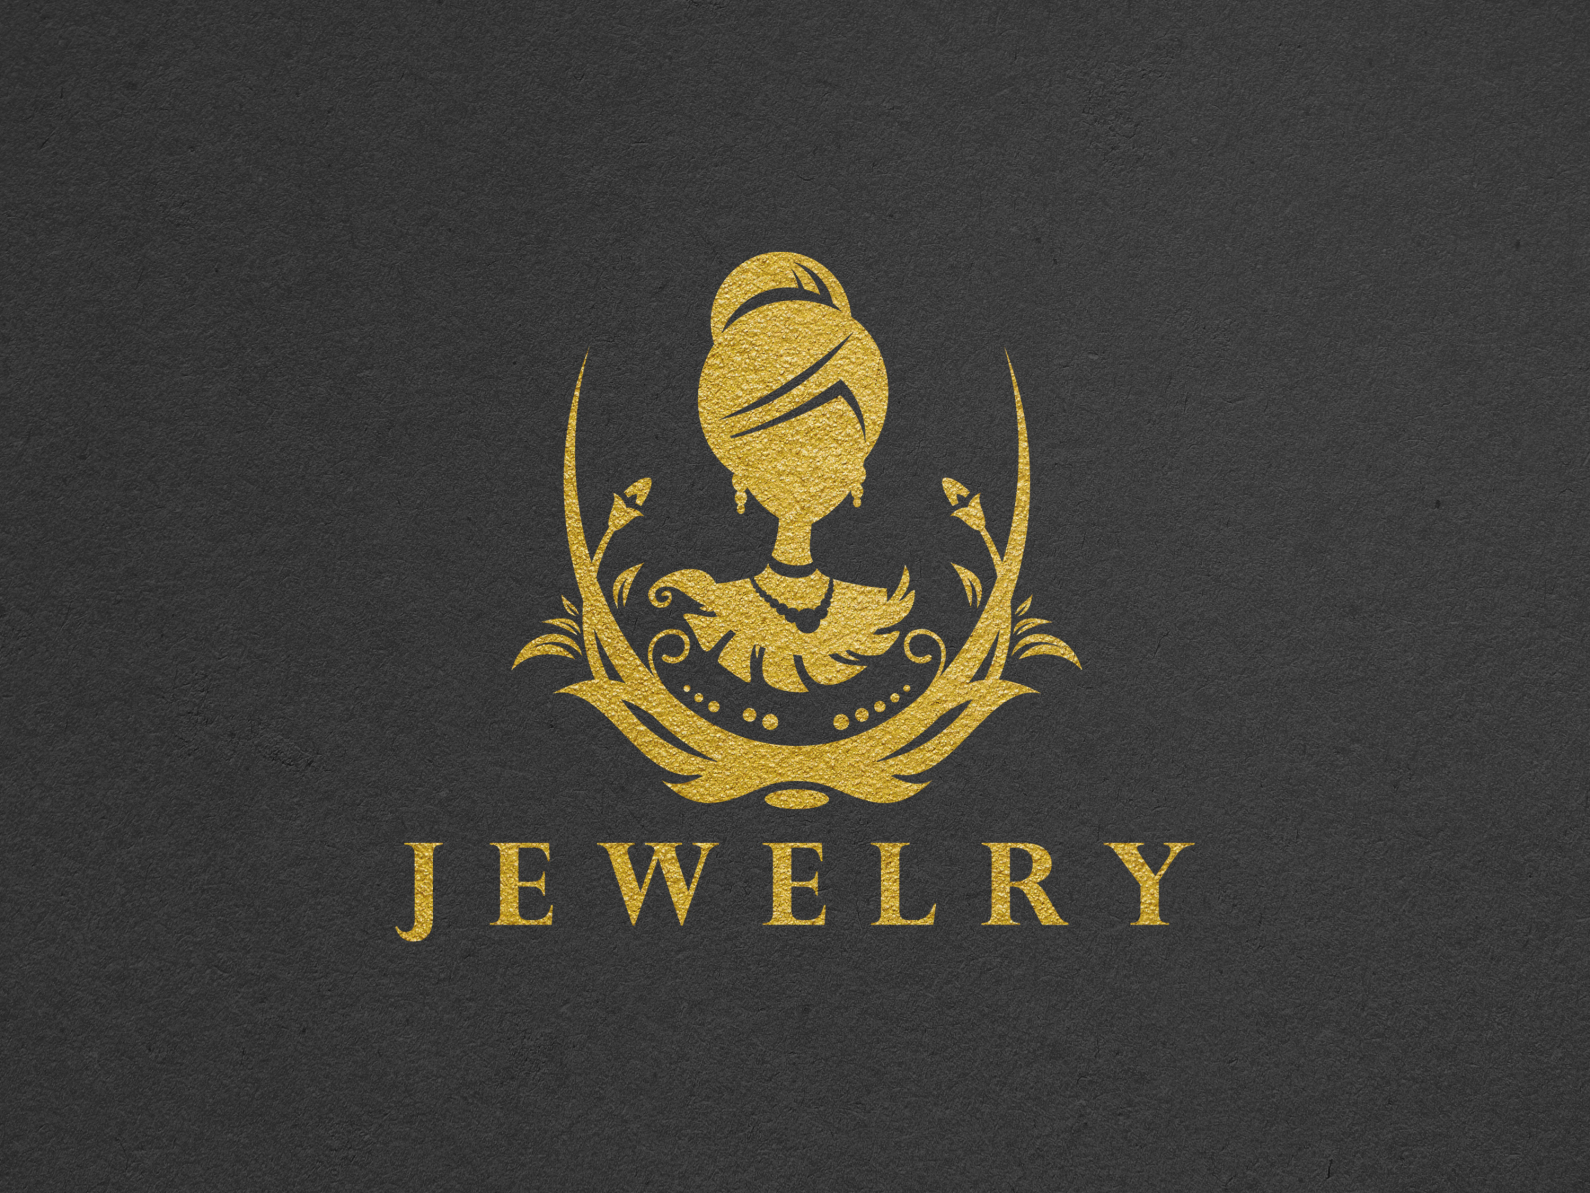 Jewery Women logo by Darshan Thakkar on Dribbble